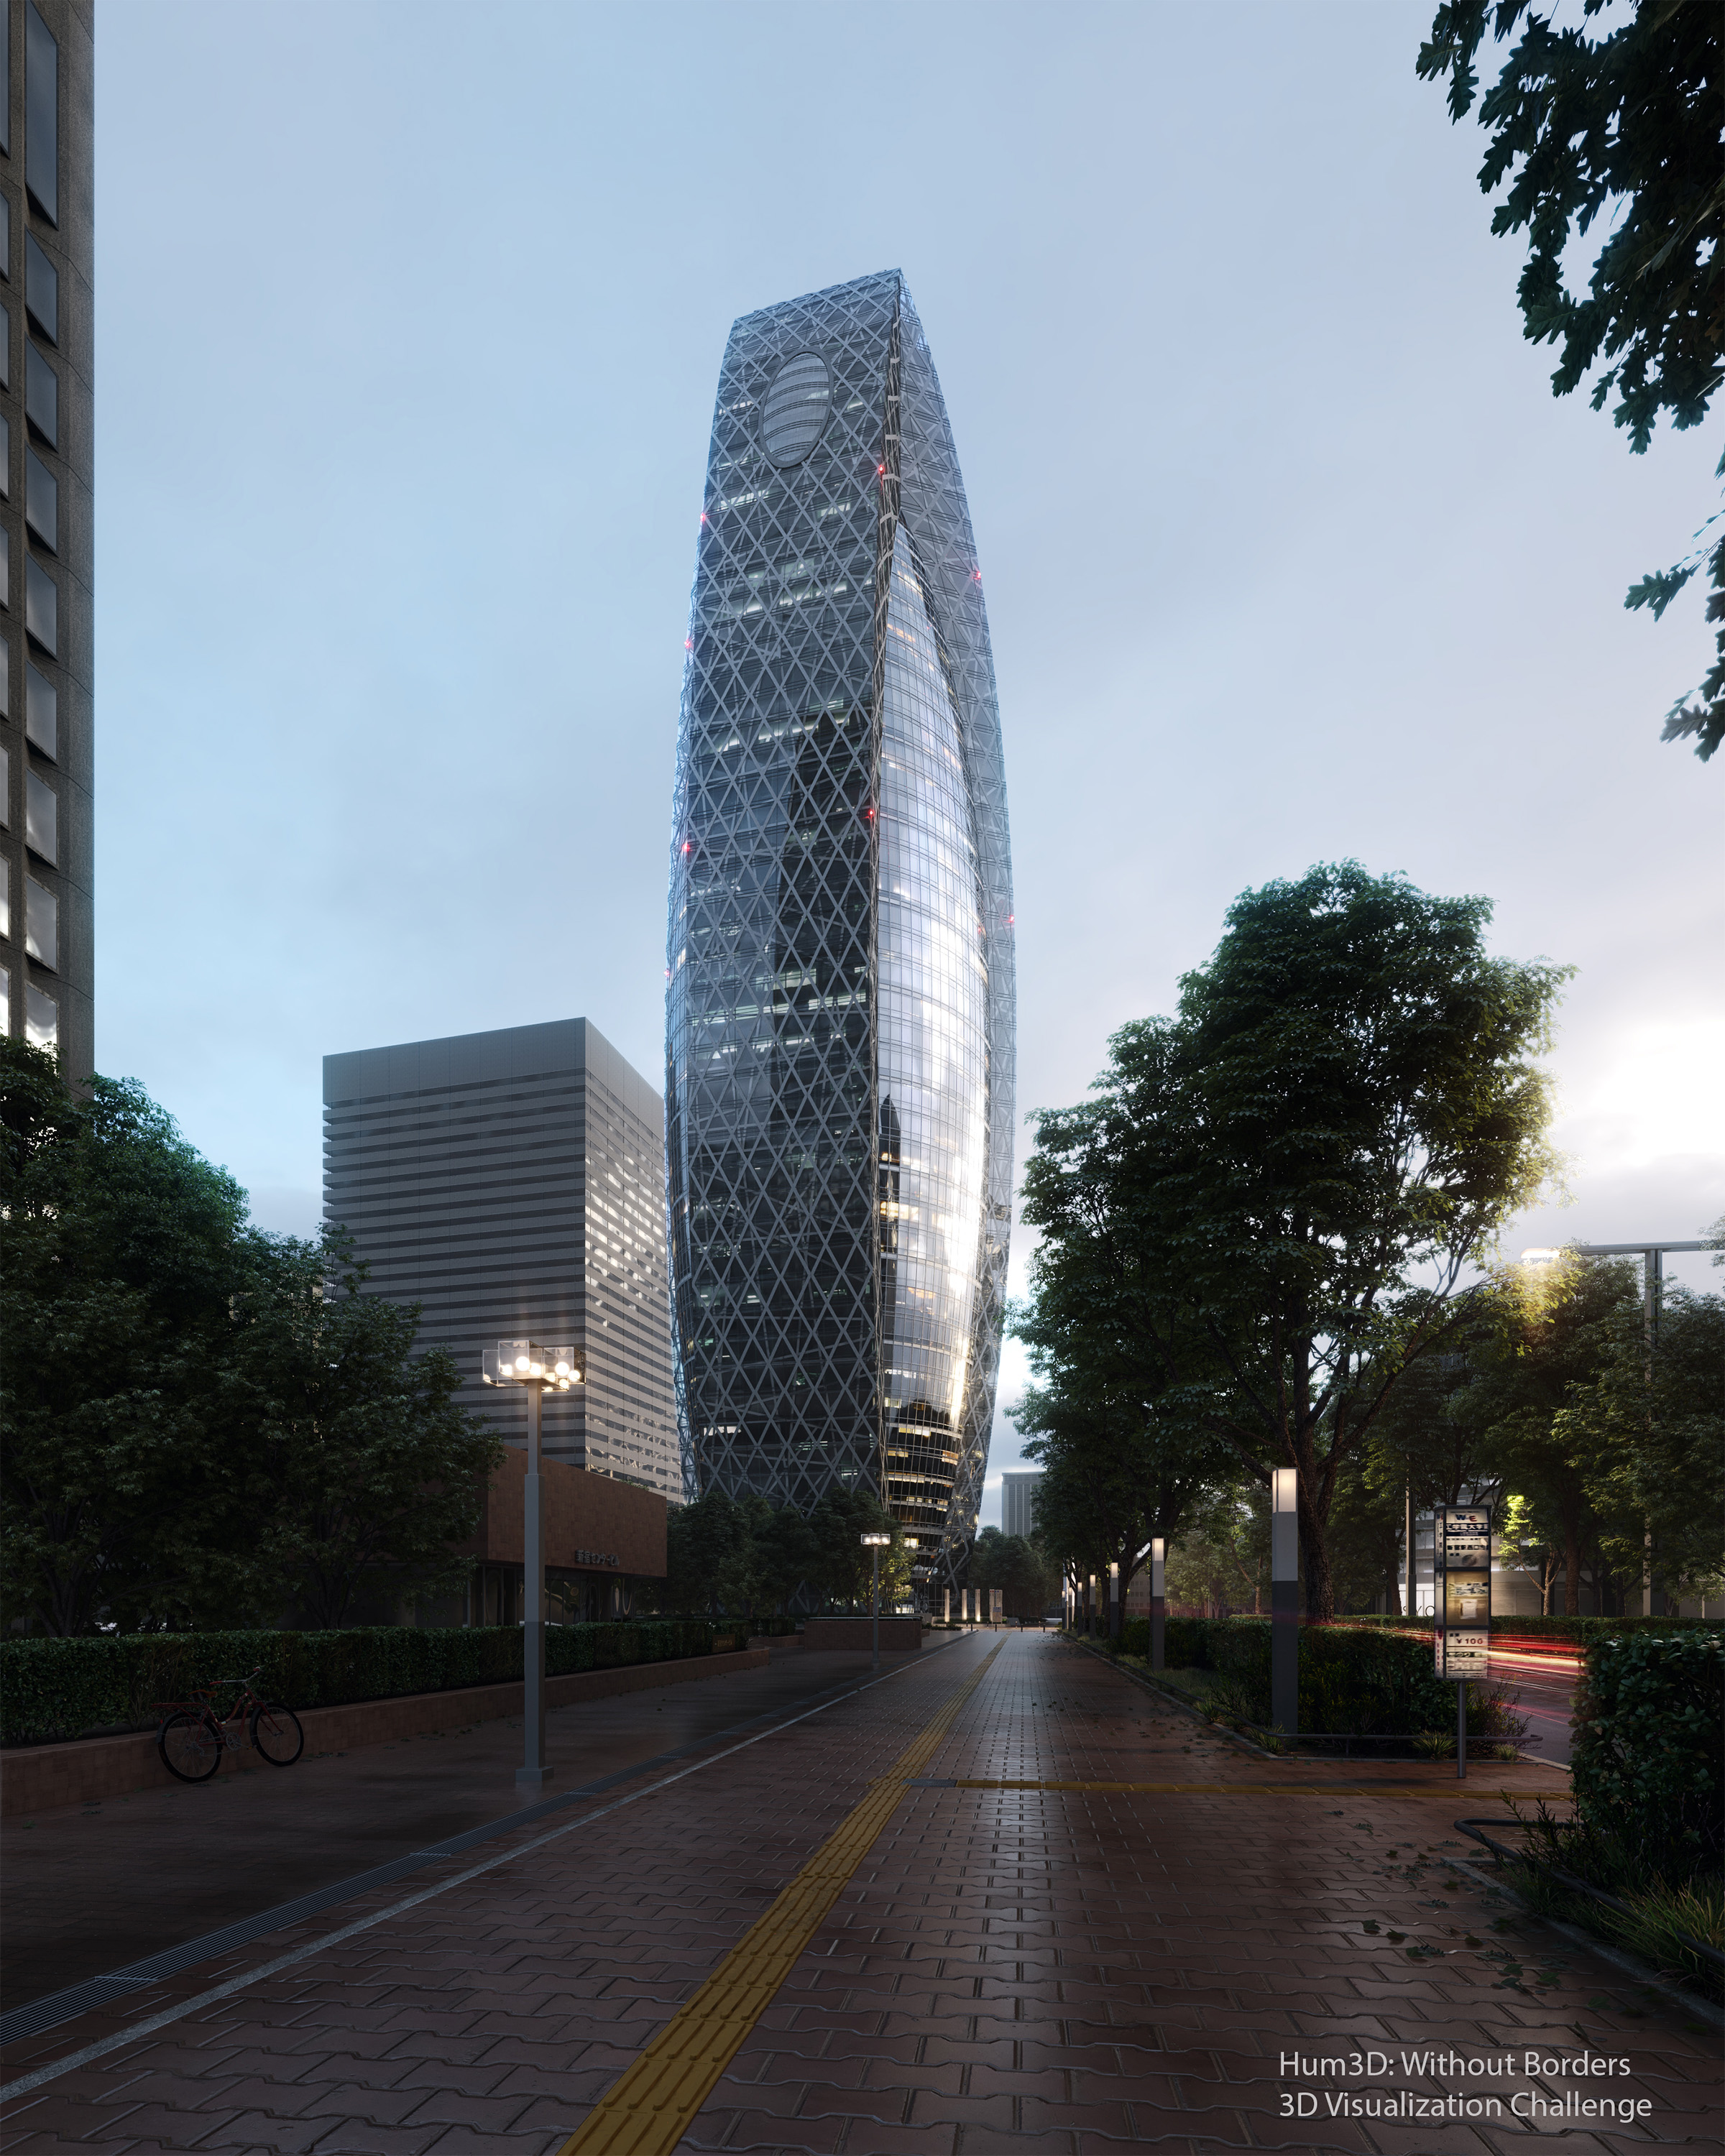 Mode Gakuen Cocoon Tower (Tokyo) by Todor Vladev